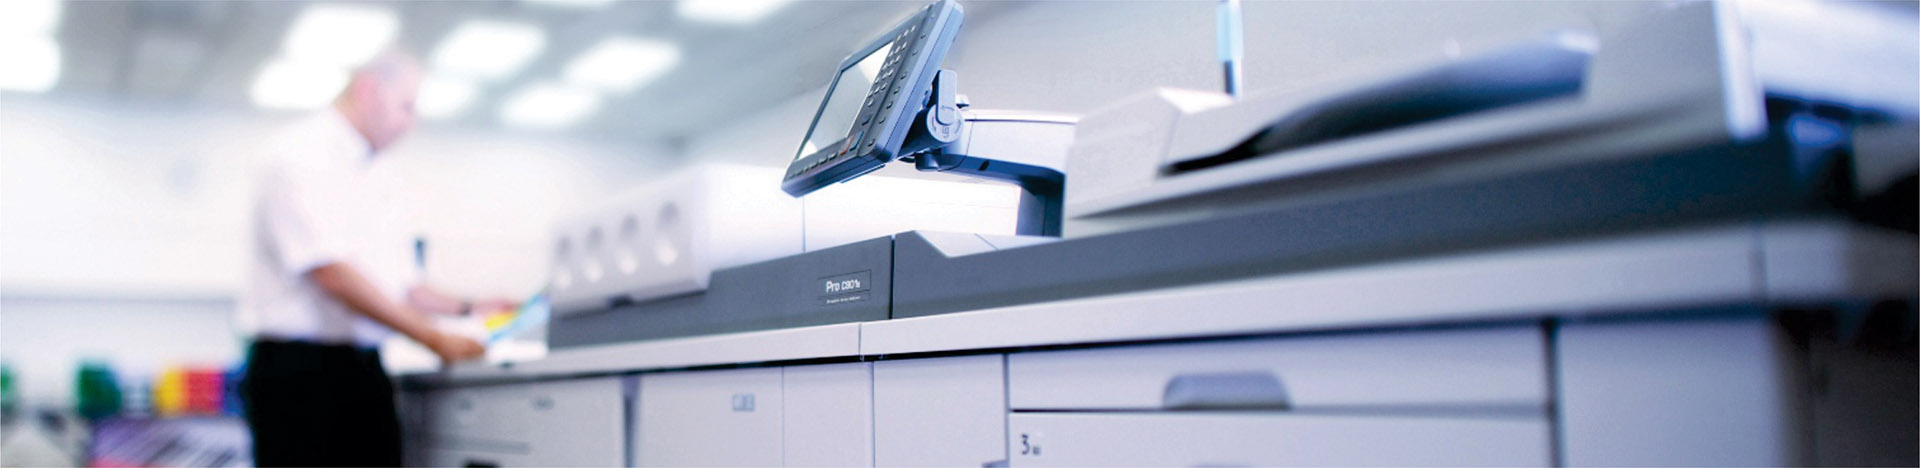 Printing rješenja, kovertiranje, direktni marketing, varijabilna štampa